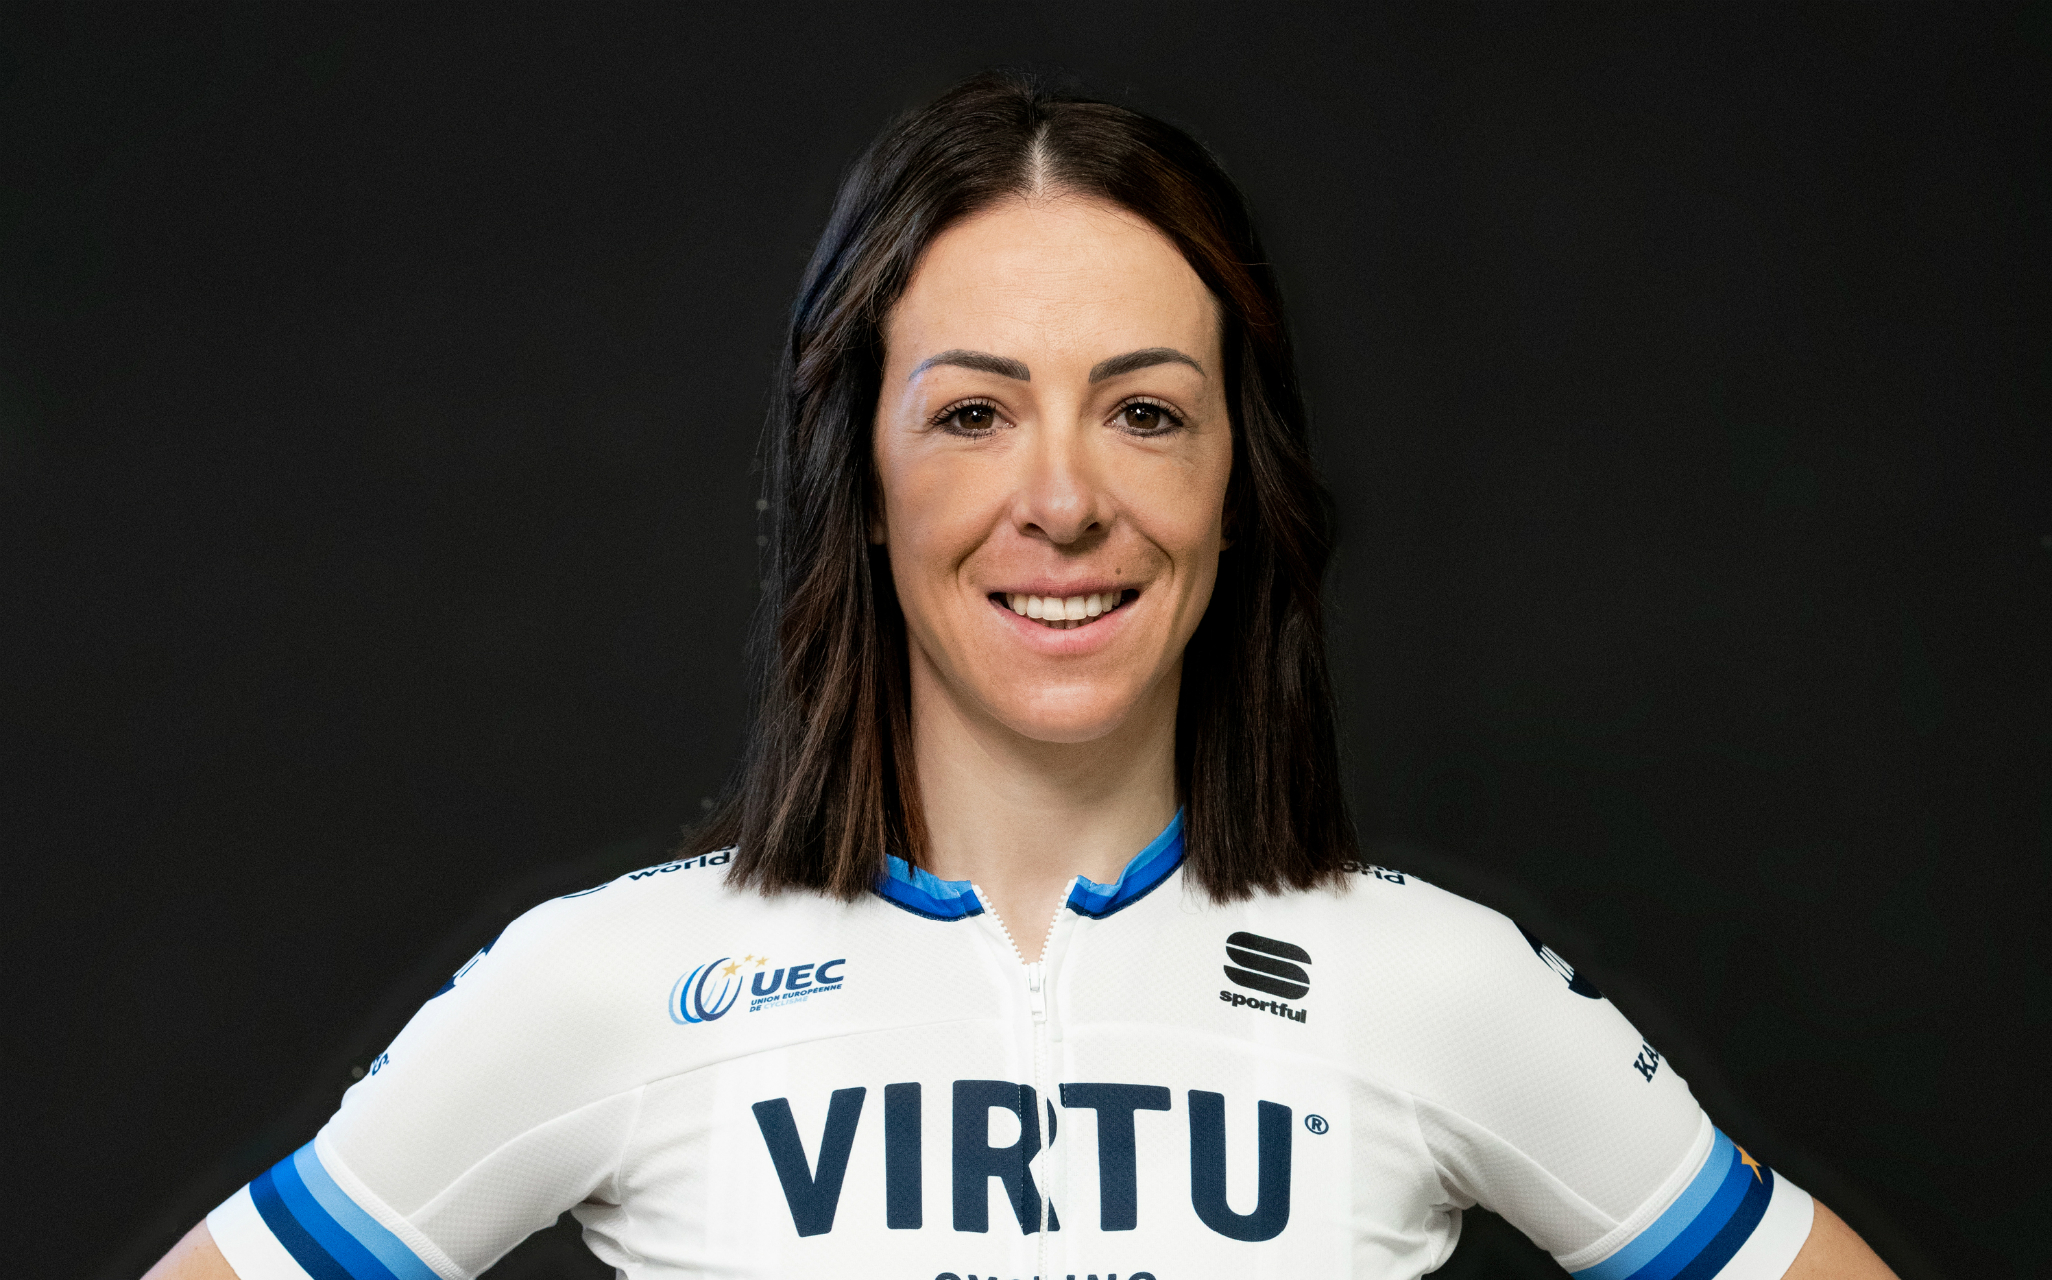 Gracia Orlova 2019: etap 3. Marta Bastianelli bez konkurencji